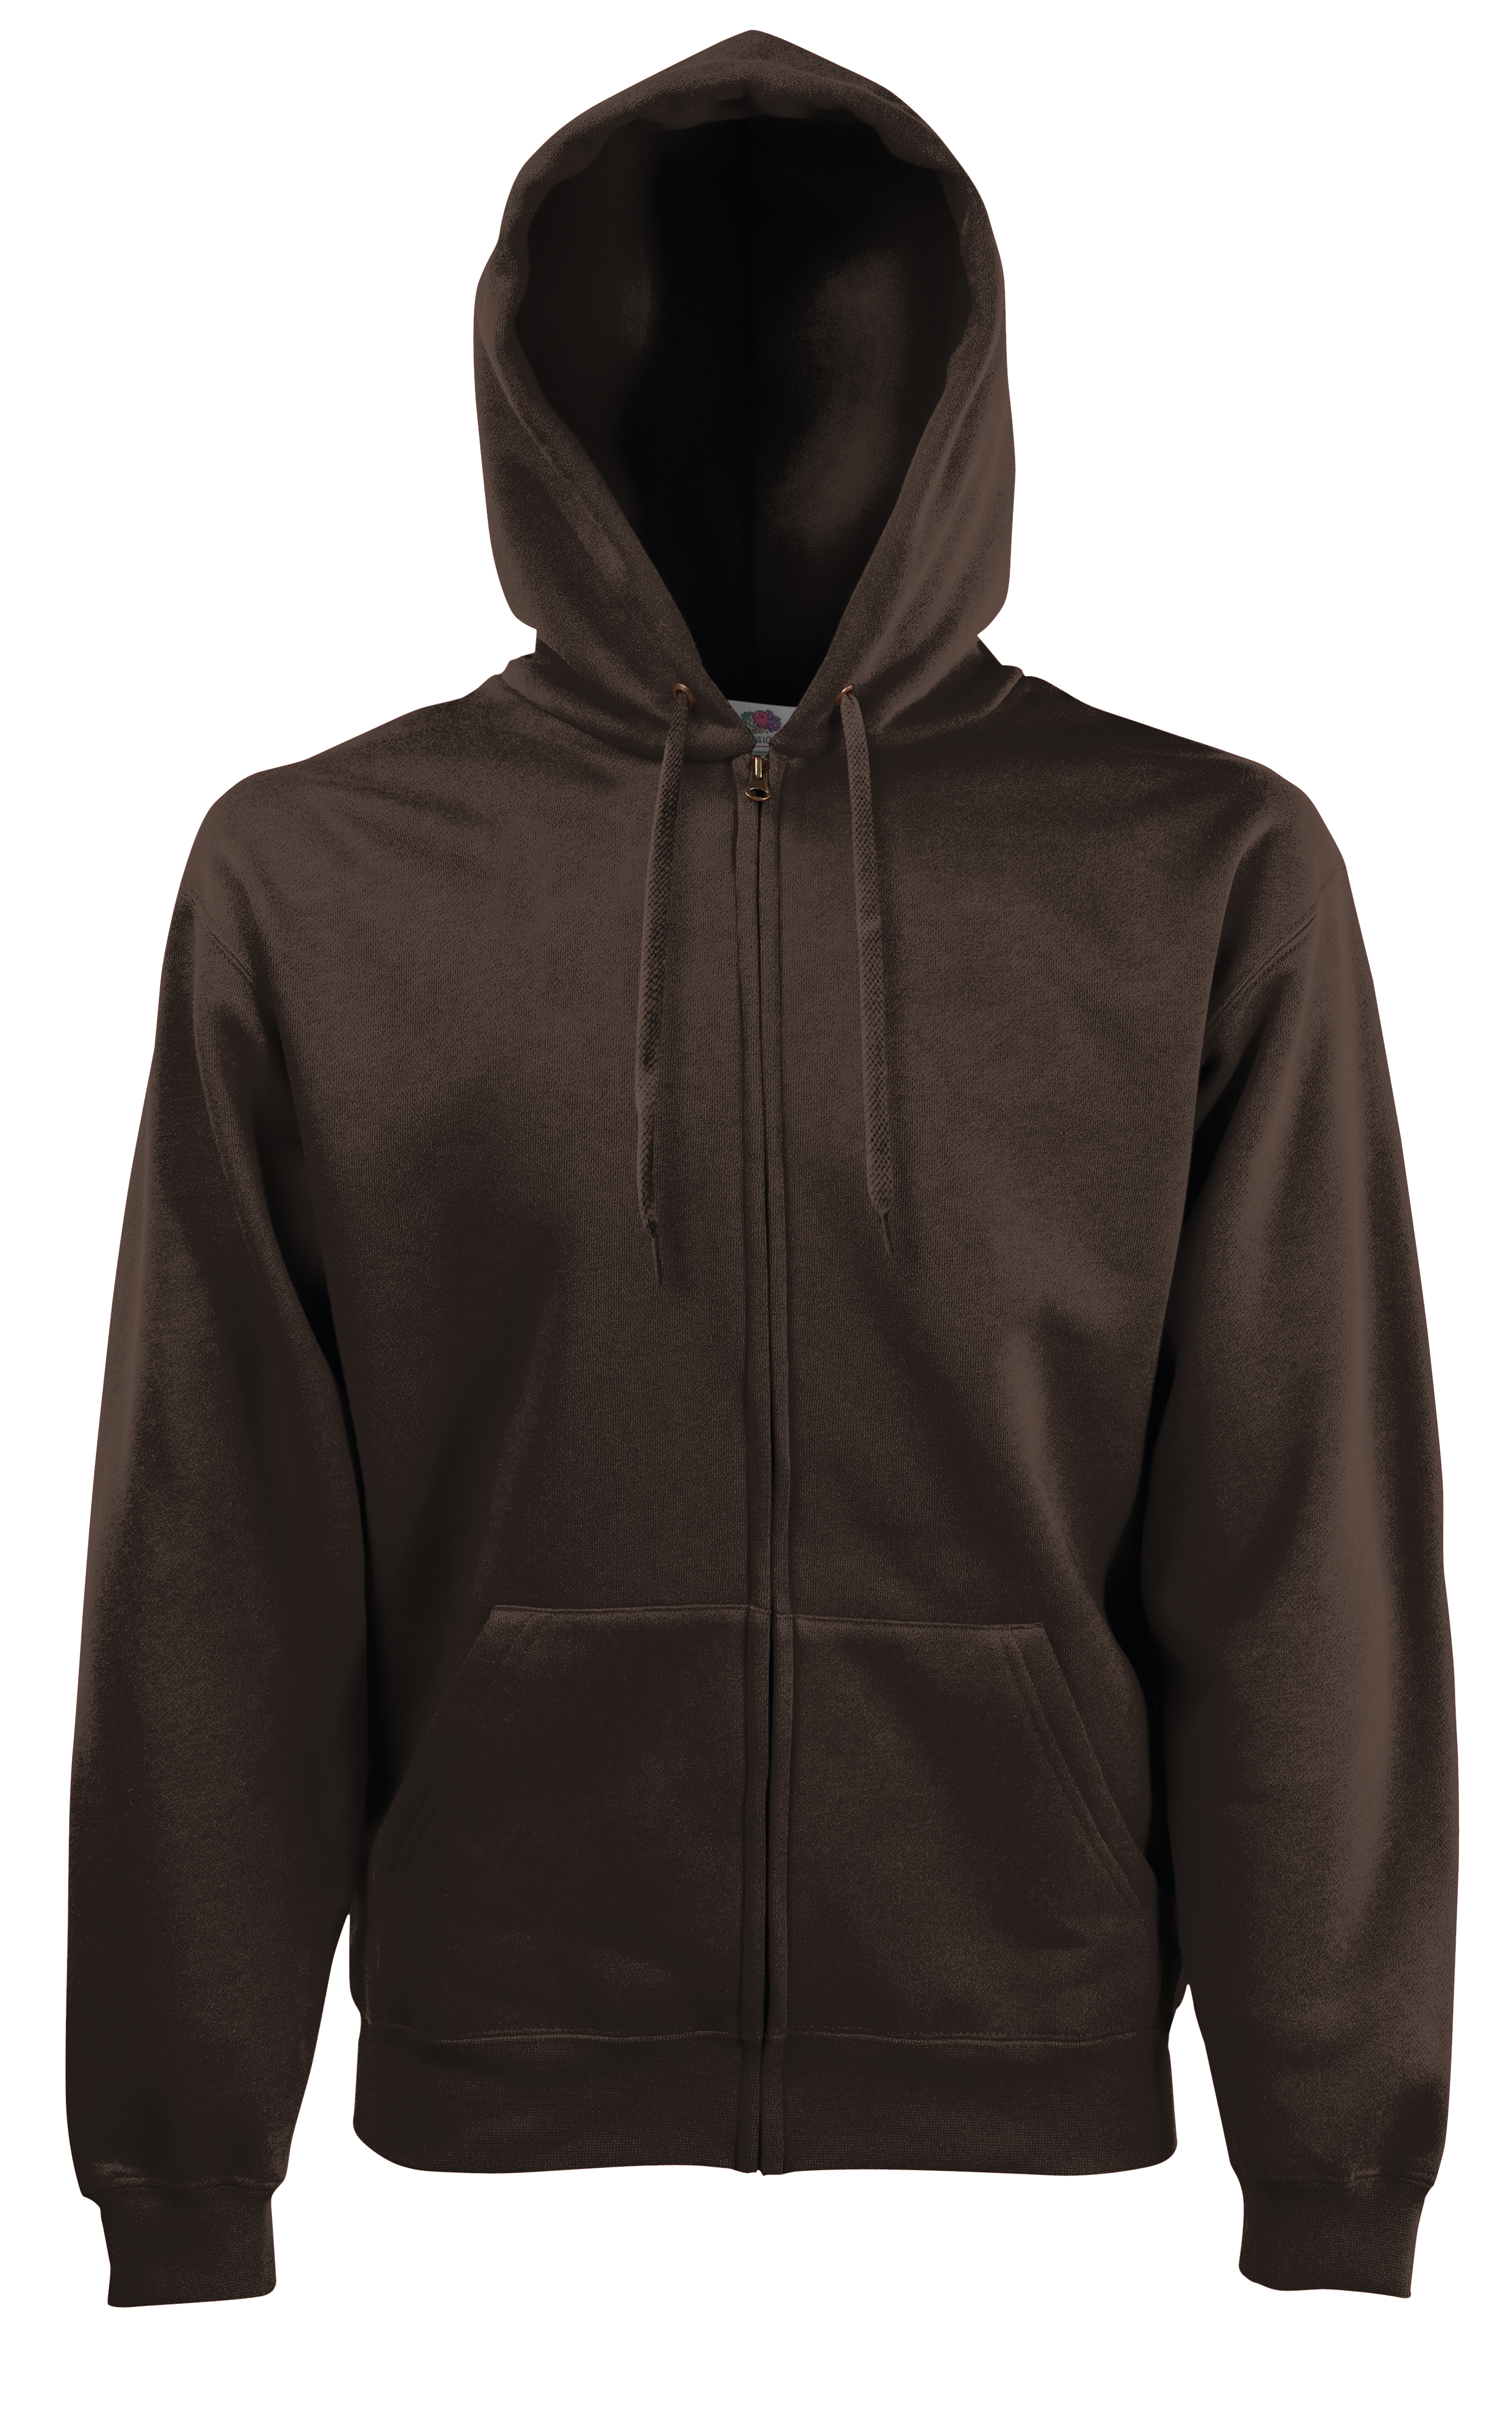 ax-httpswebsystems.s3.amazonaws.comtmp_for_downloadfruit-of-the-loom-premium-70-30-hooded-sweatshirt-jacket-chocolate.jpg